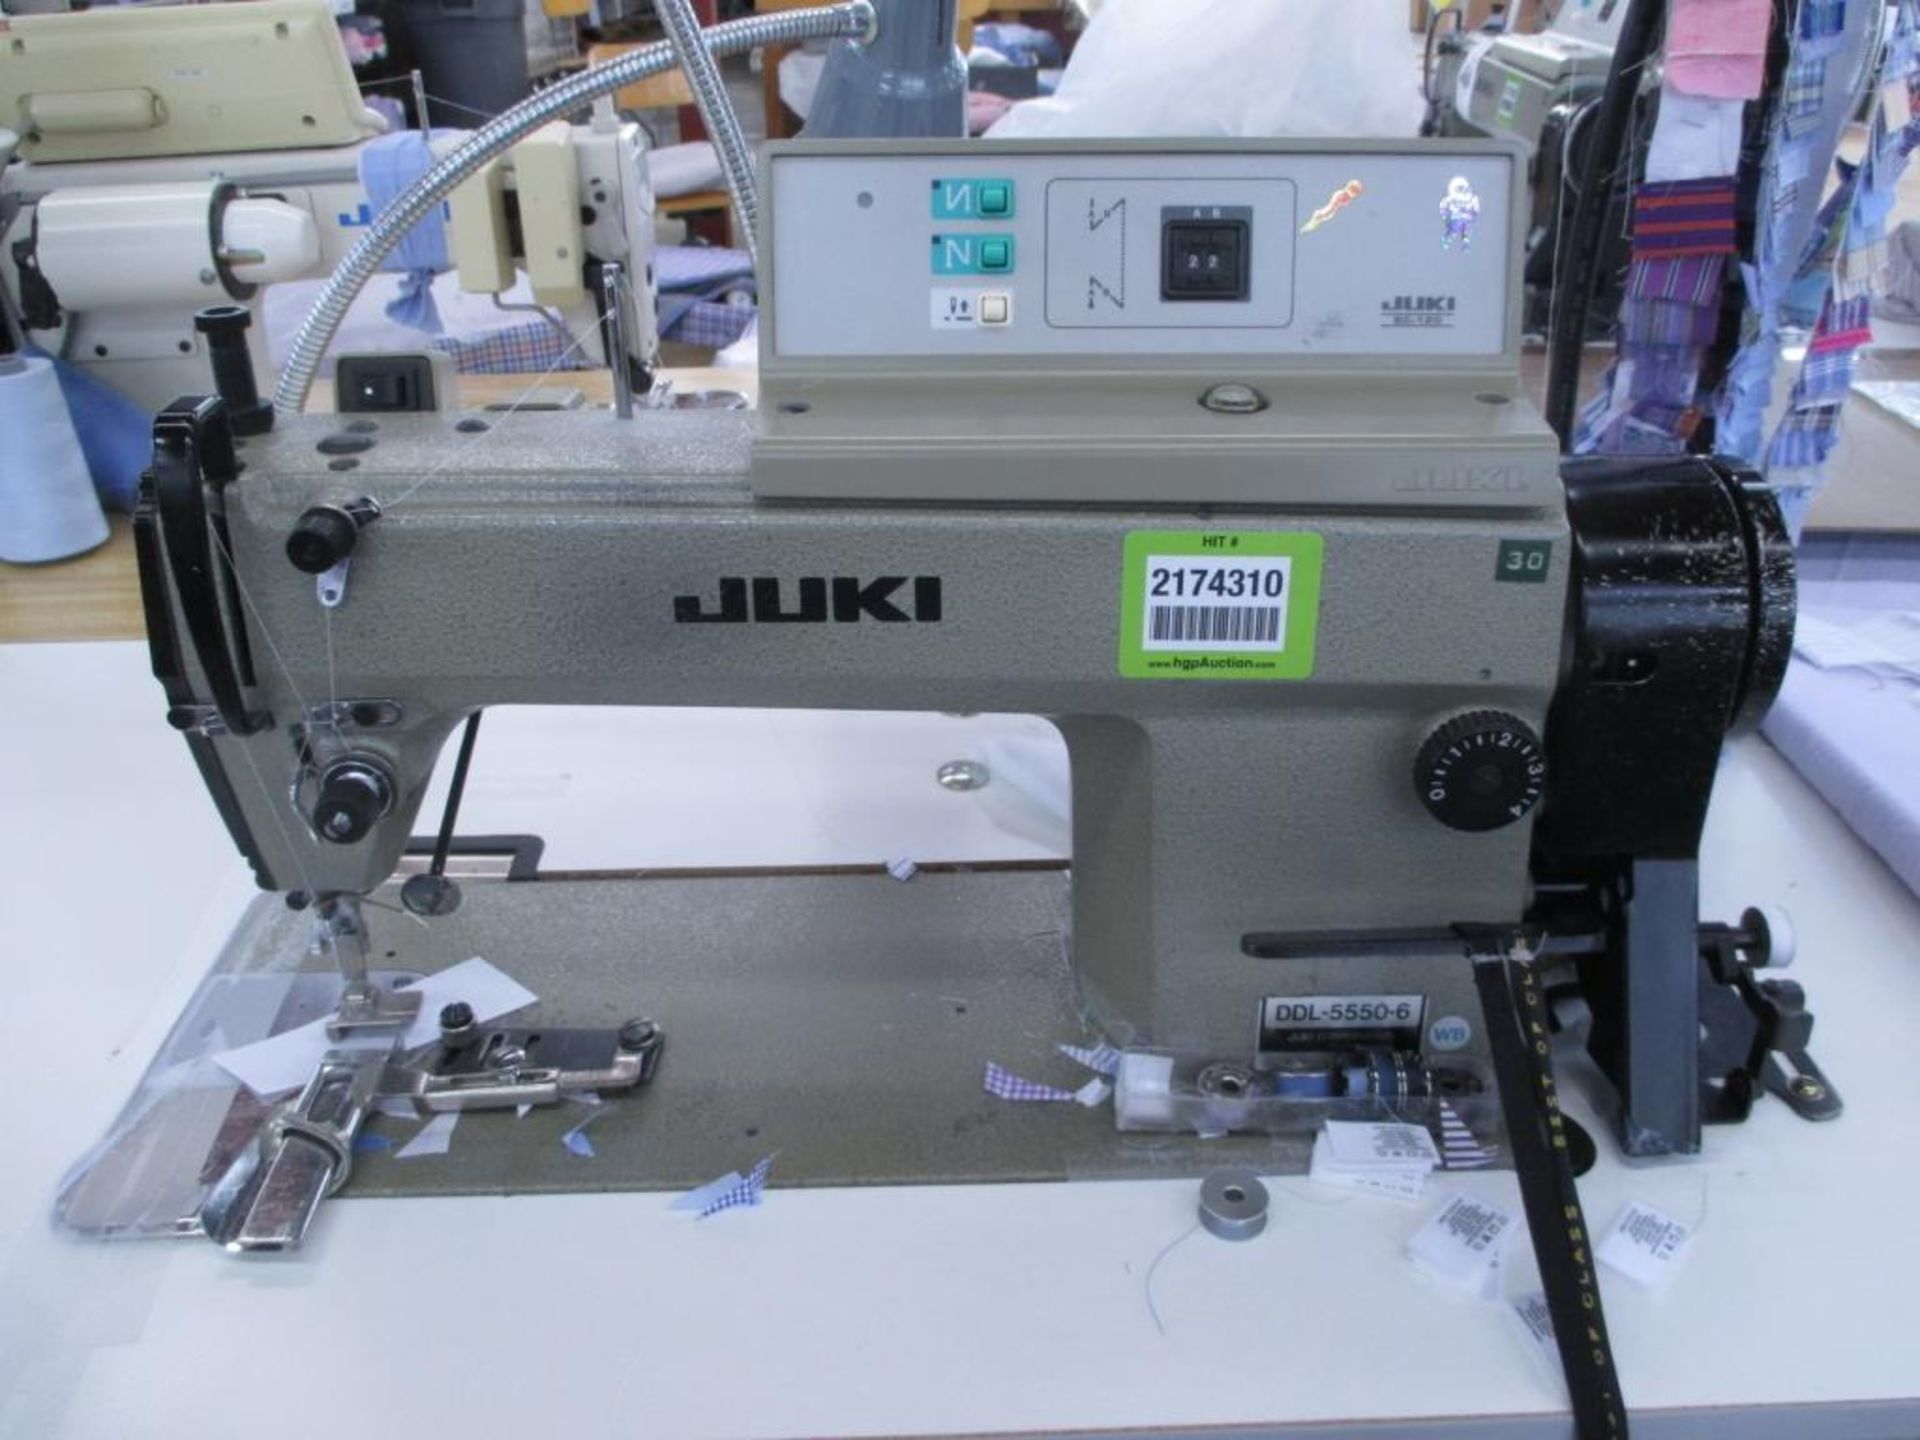 Lockstitch Reverse Industrial Sewing Machine. Juki DDL-5550-6 1-needle Lock Stitch Reverse - Image 2 of 5